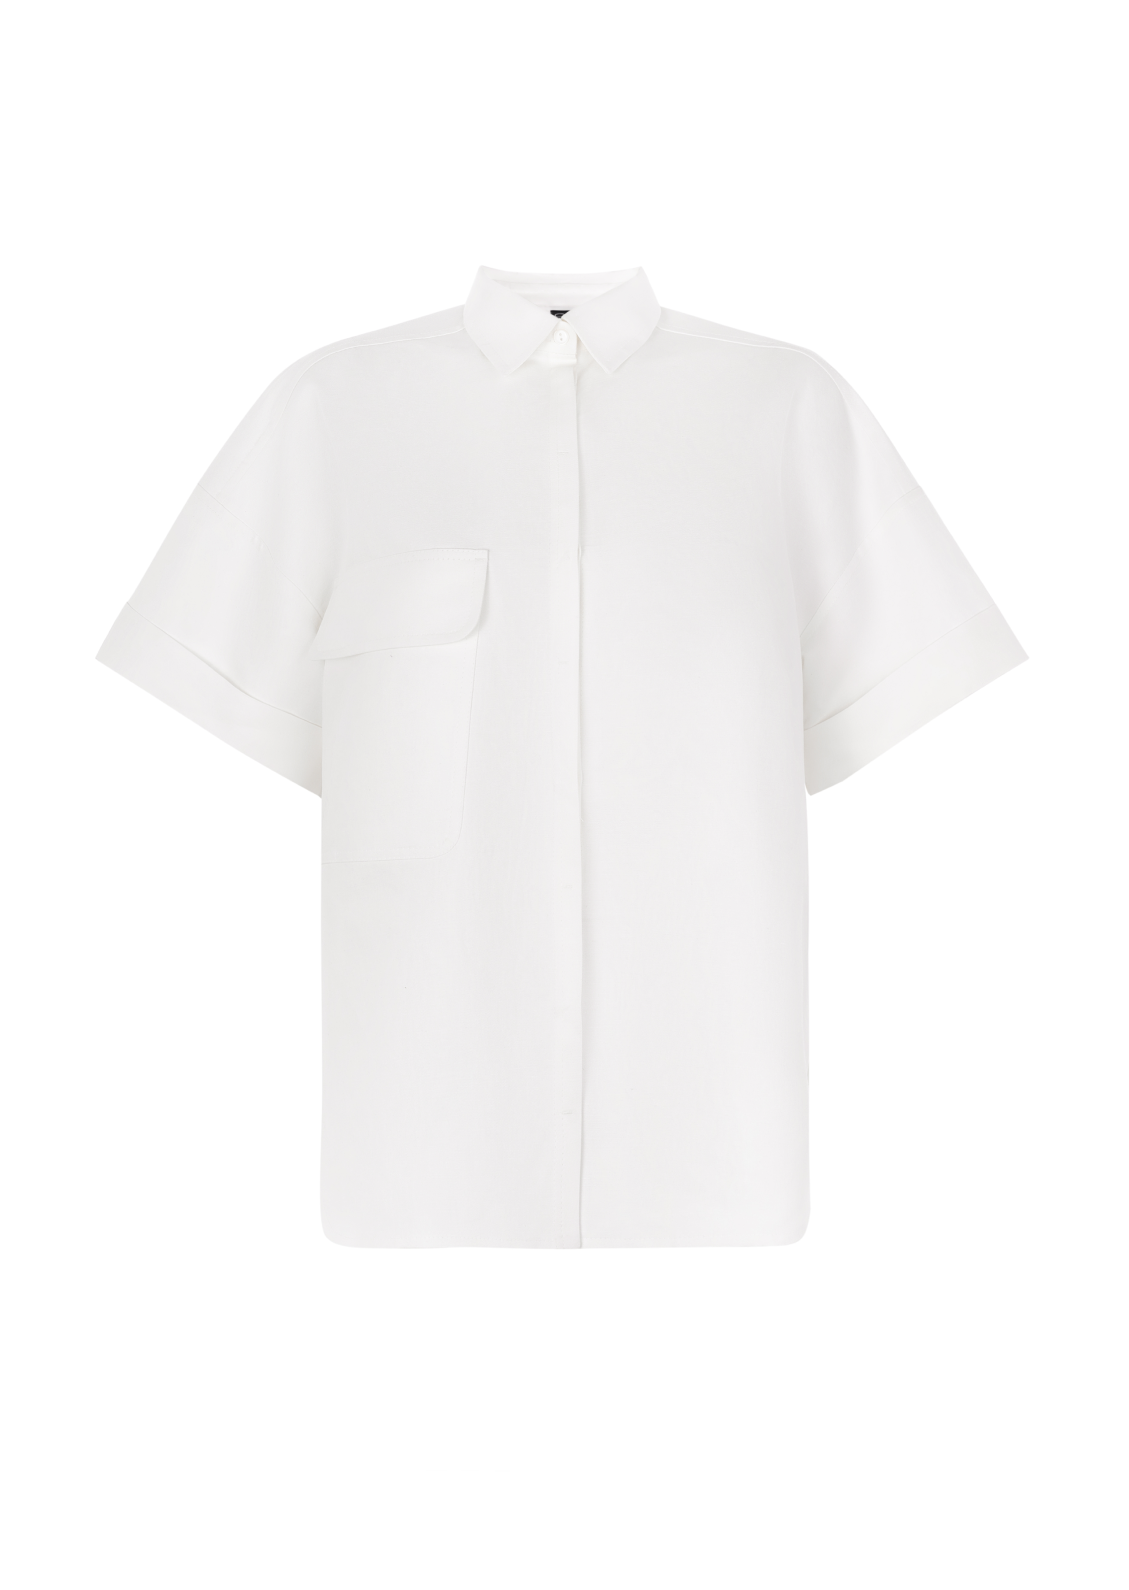 Shirt in white